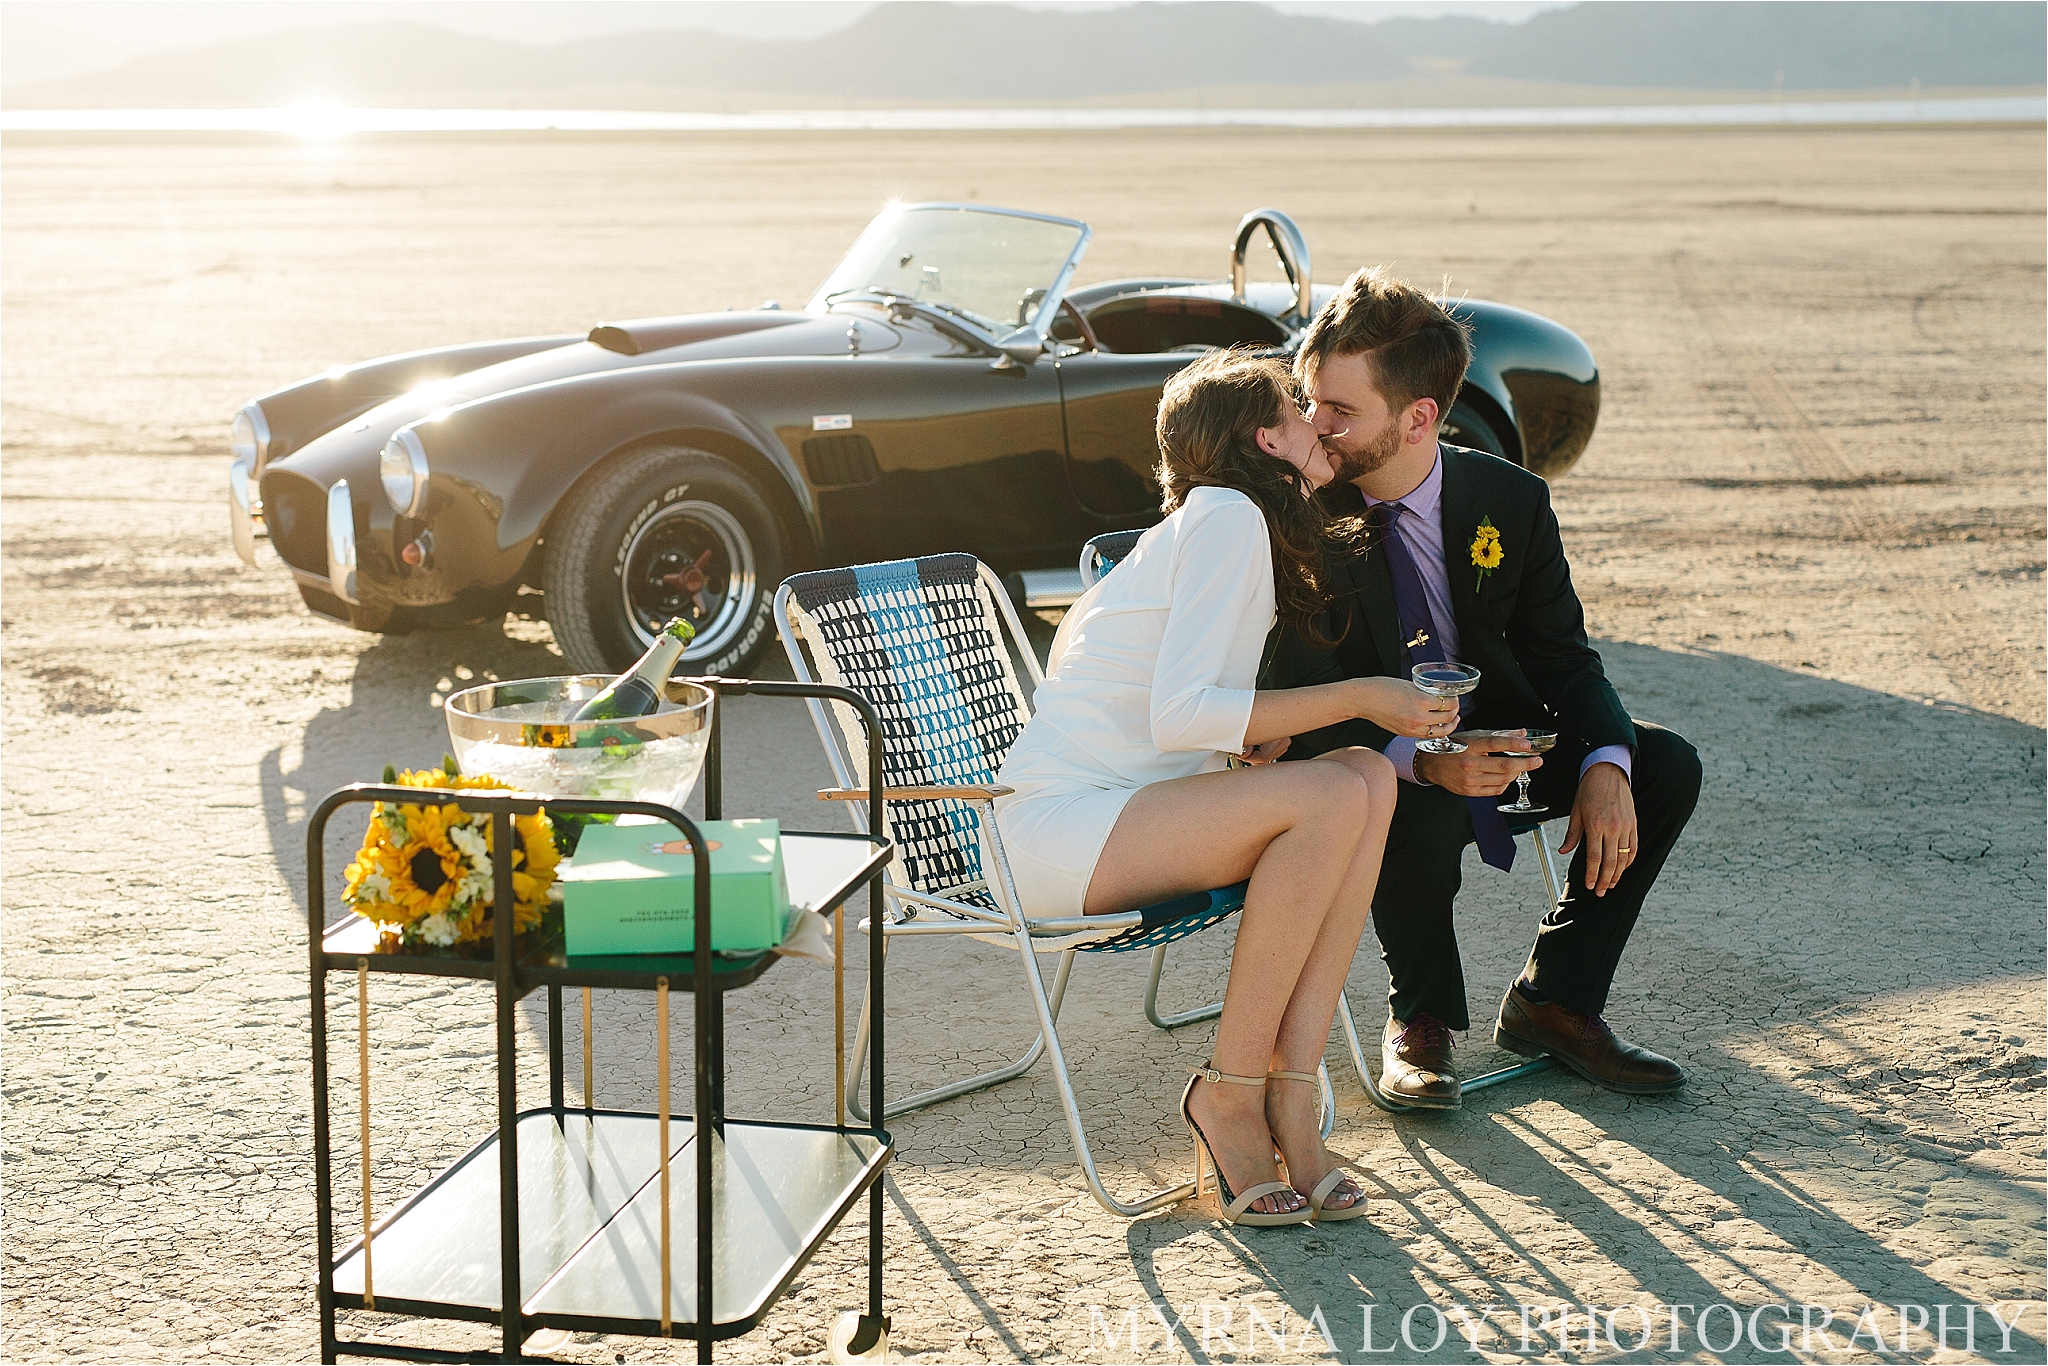 las vegas - elopement - dry lake bed - wedding - photography - elvis - shelby cobra - frenchie